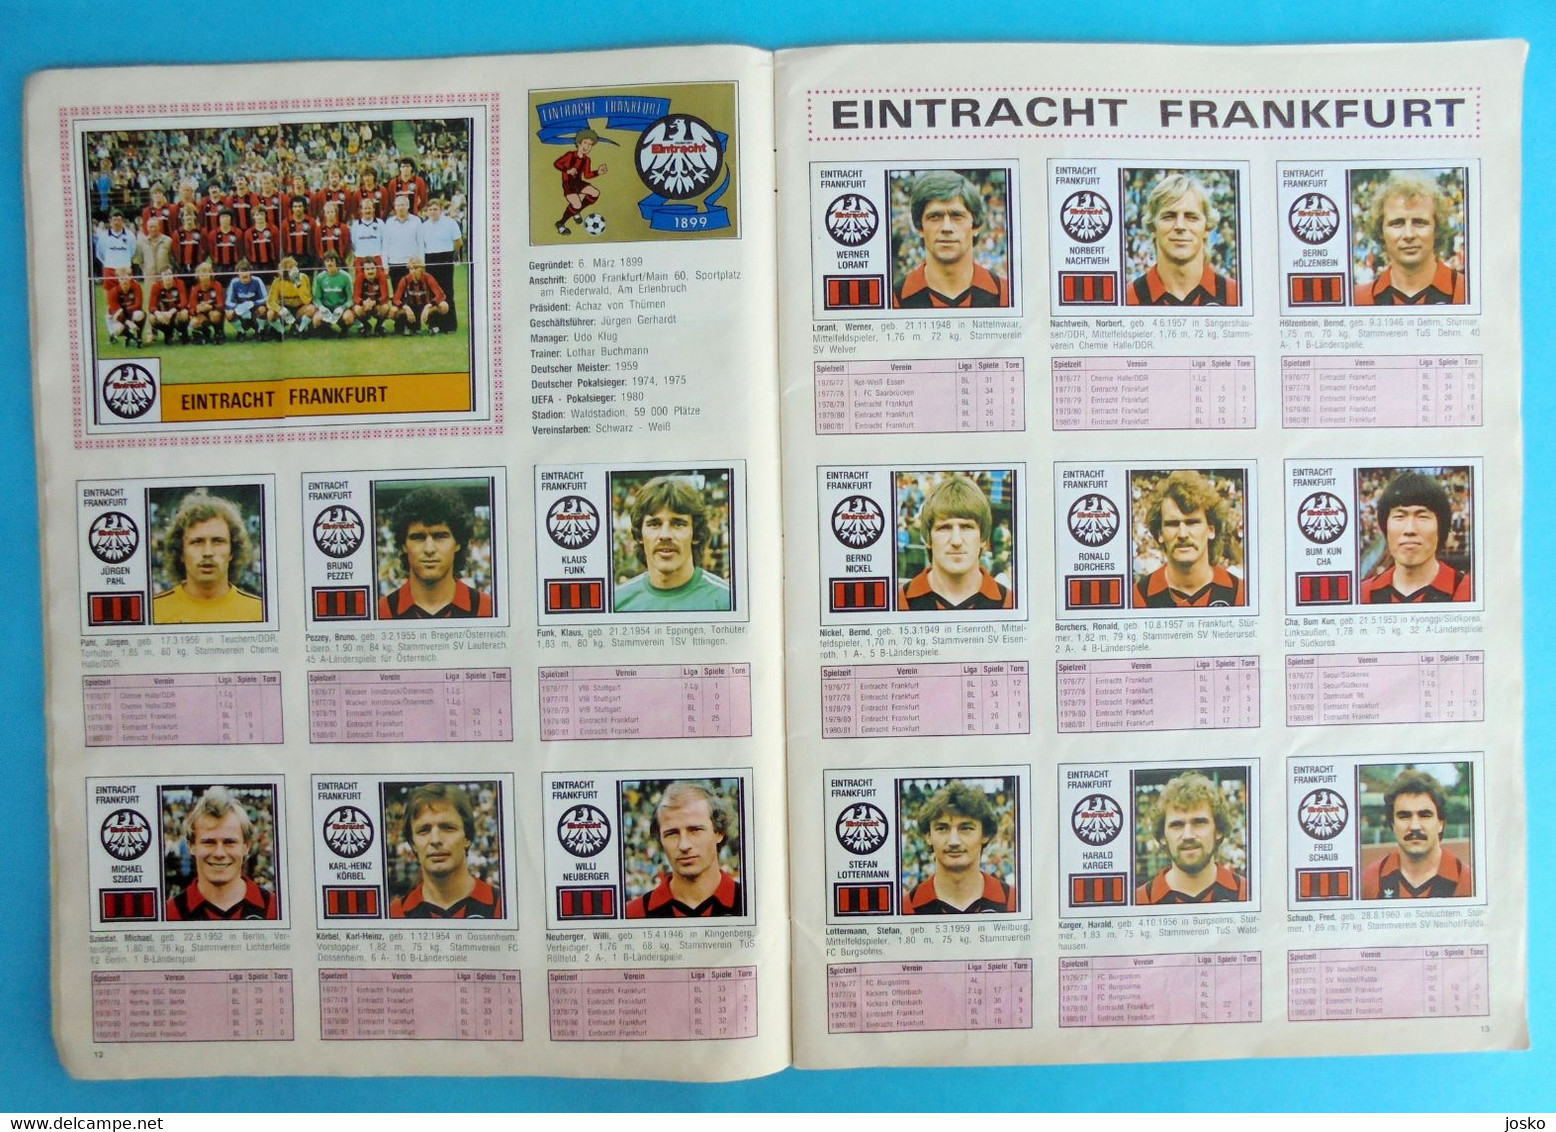 FUSSBALL 81 - Panini old German album * COMPLETE * football soccer calcio foot futbol futebol Germany Deutschland